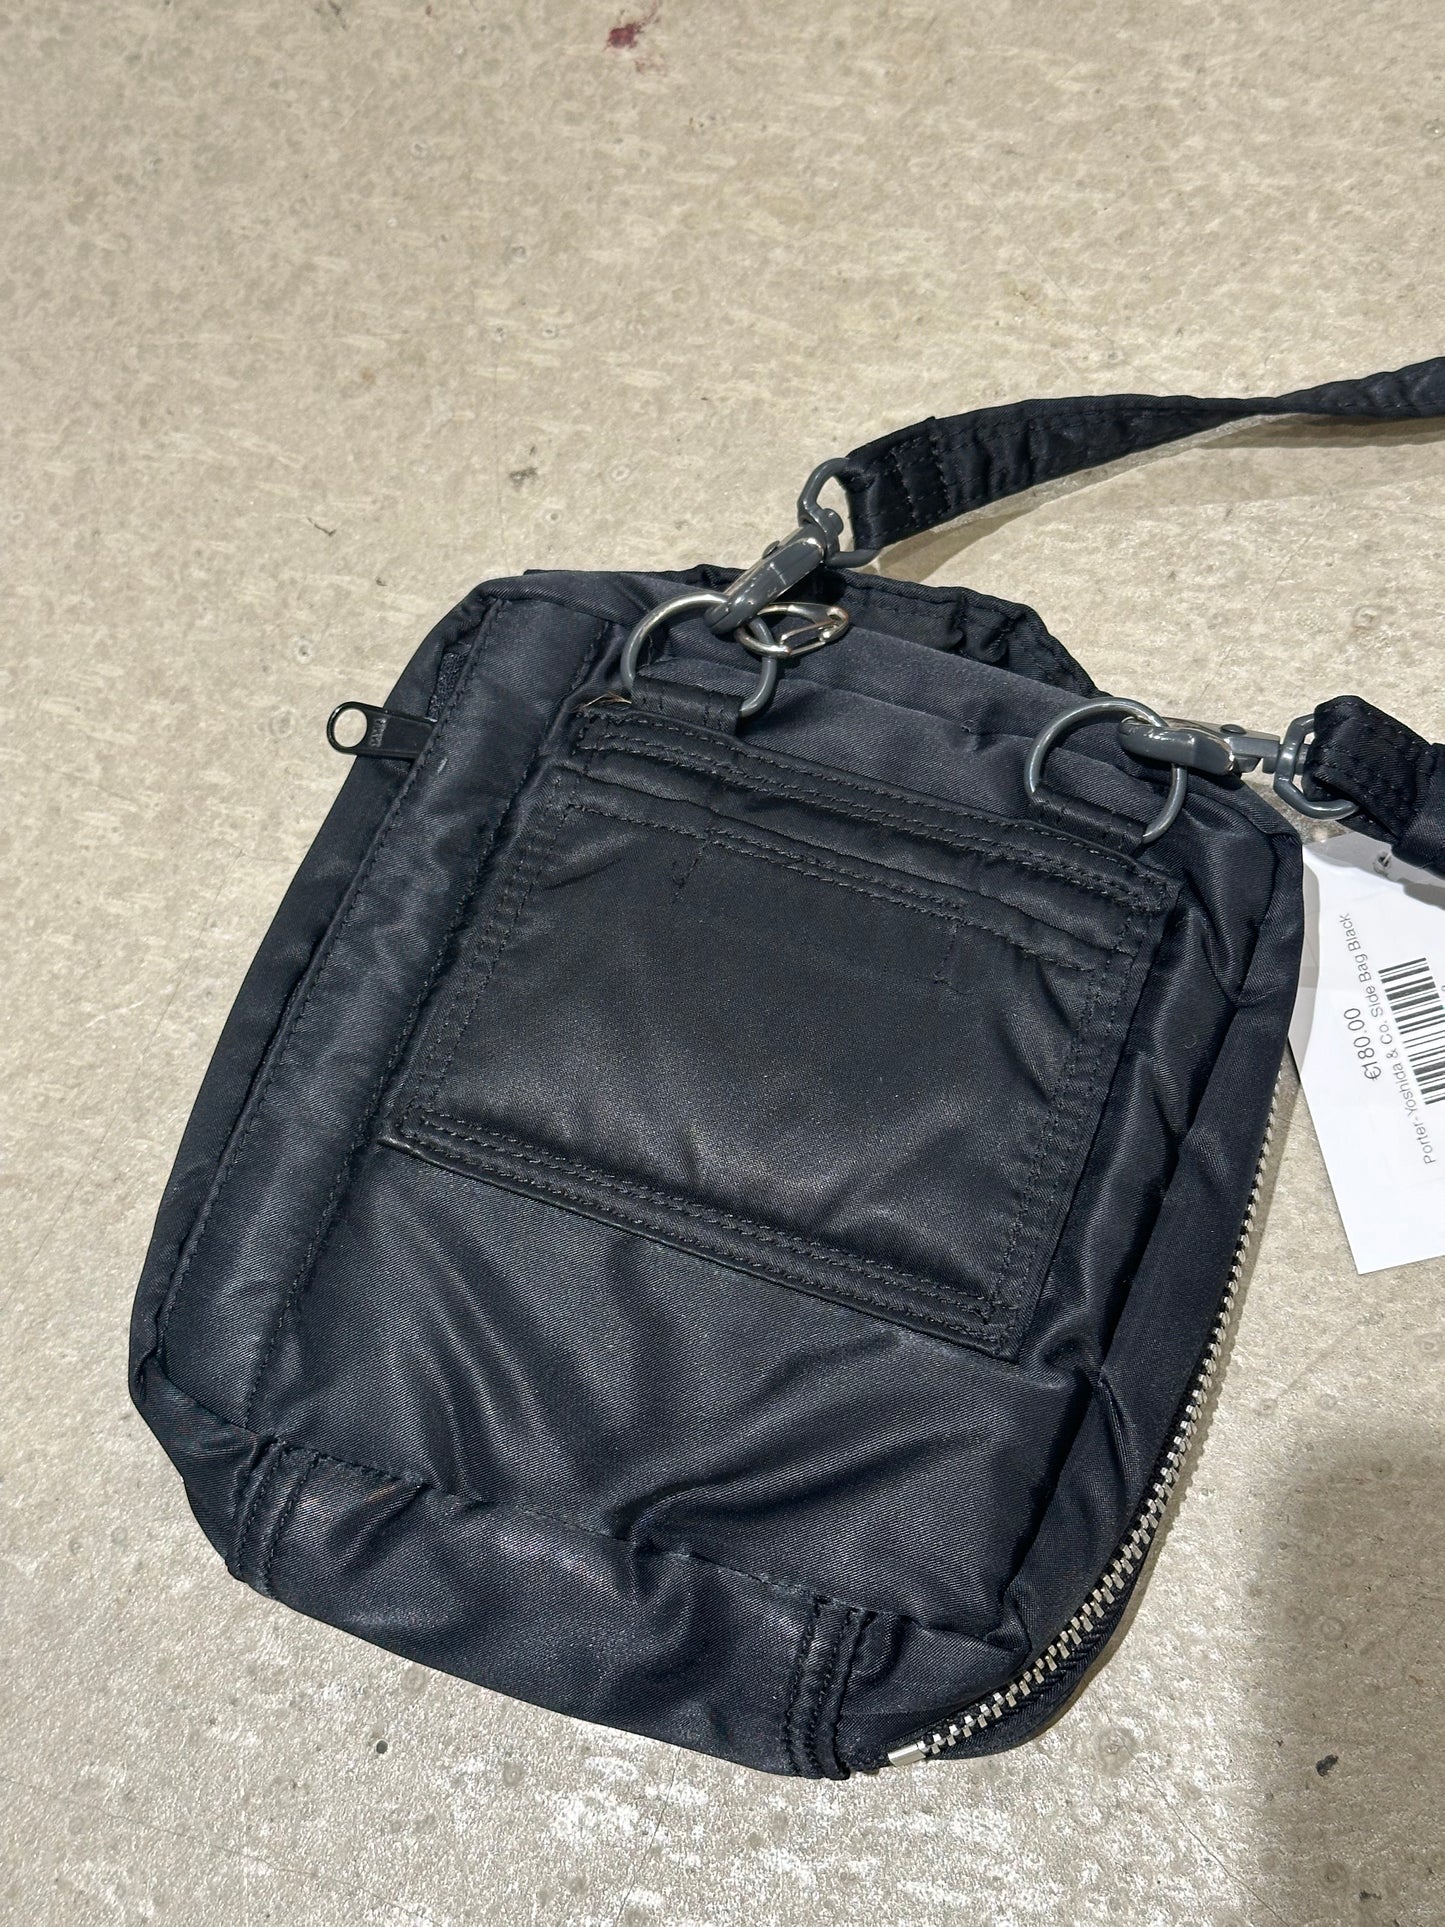 Porter-Yoshida & Co. Side Bag Black